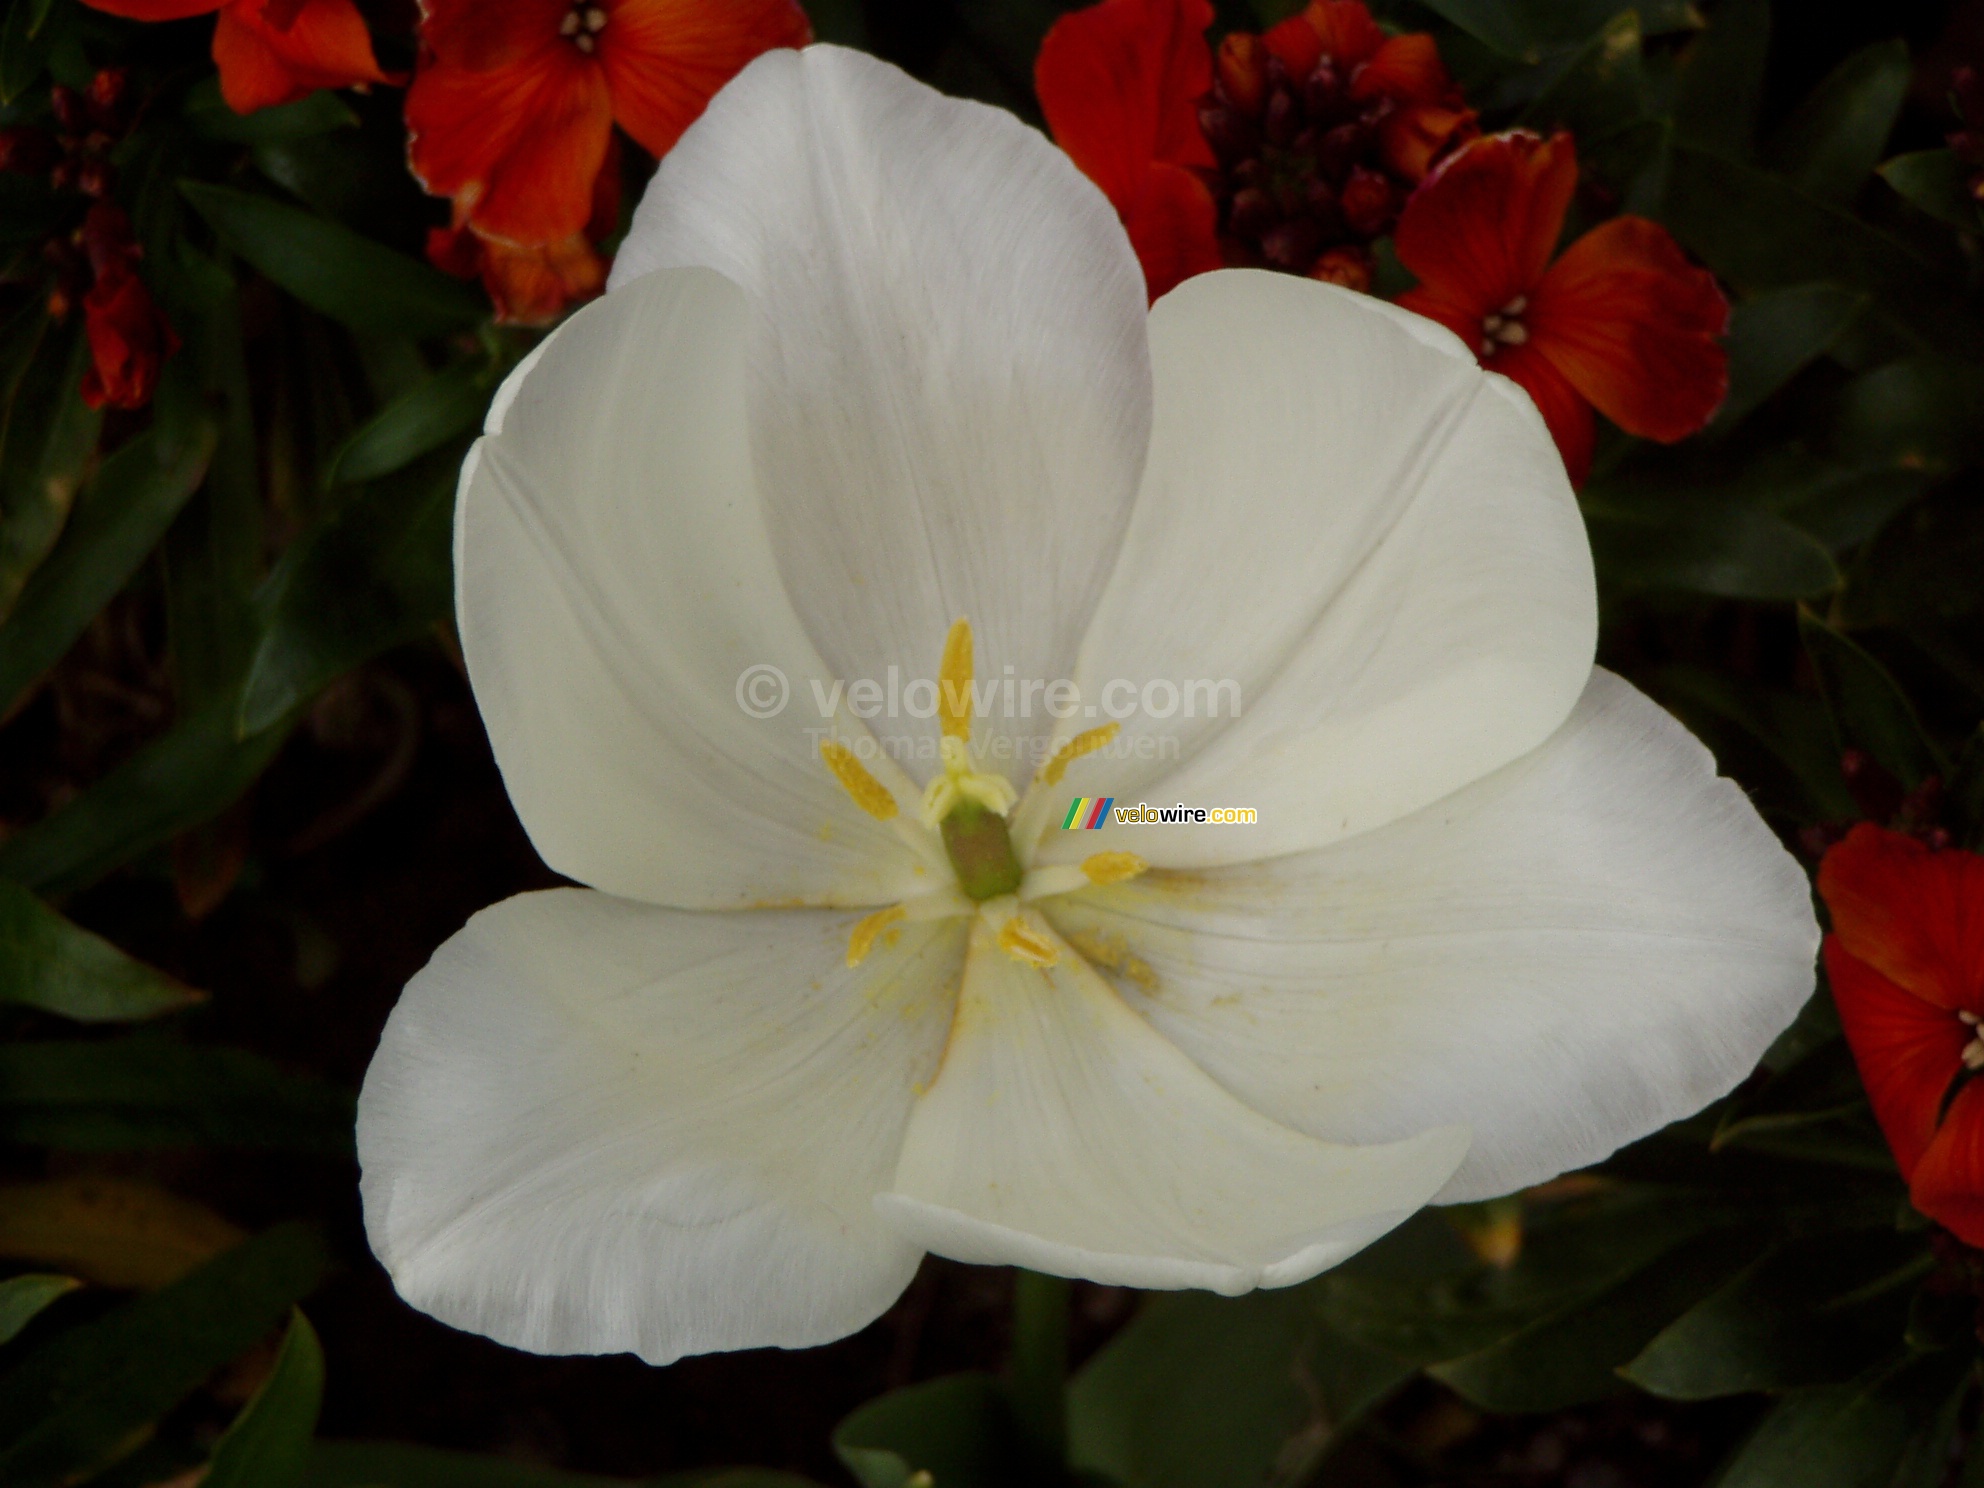 A daffodil in Salcombe